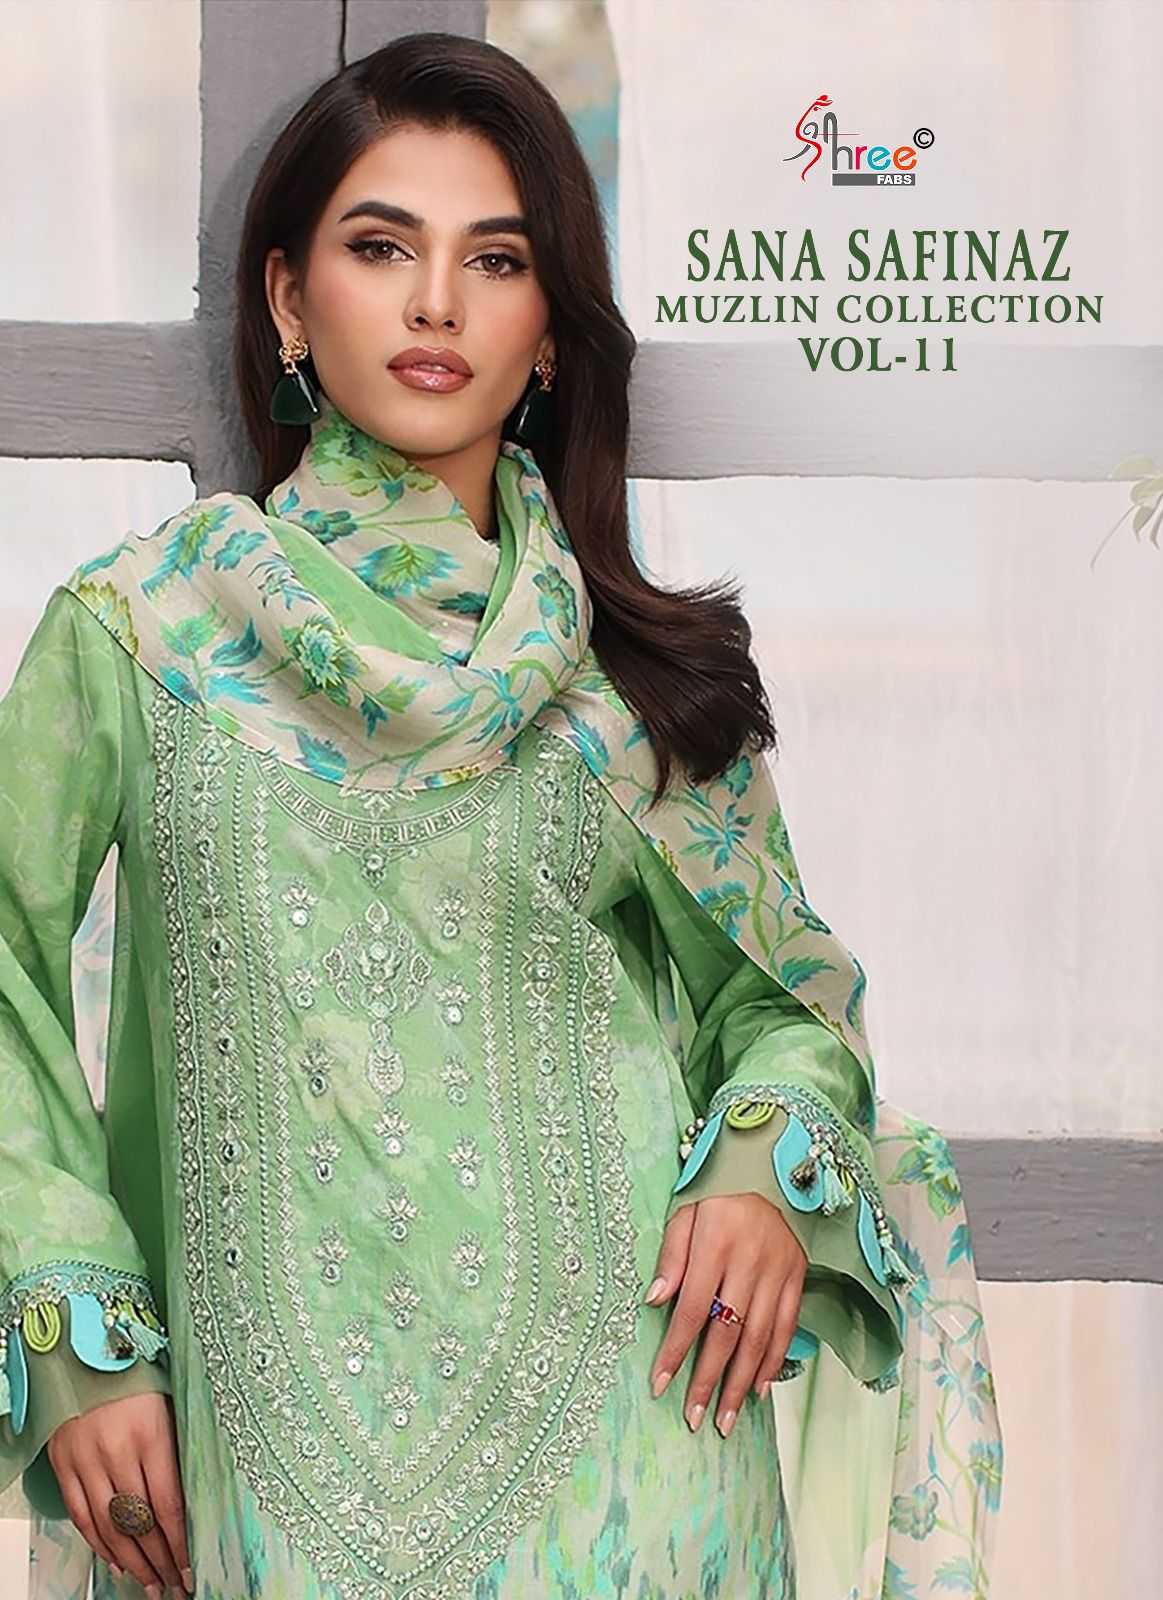 shree fabs sana safinaz muzlin collection vol 11 festival look pakistani salwar suit